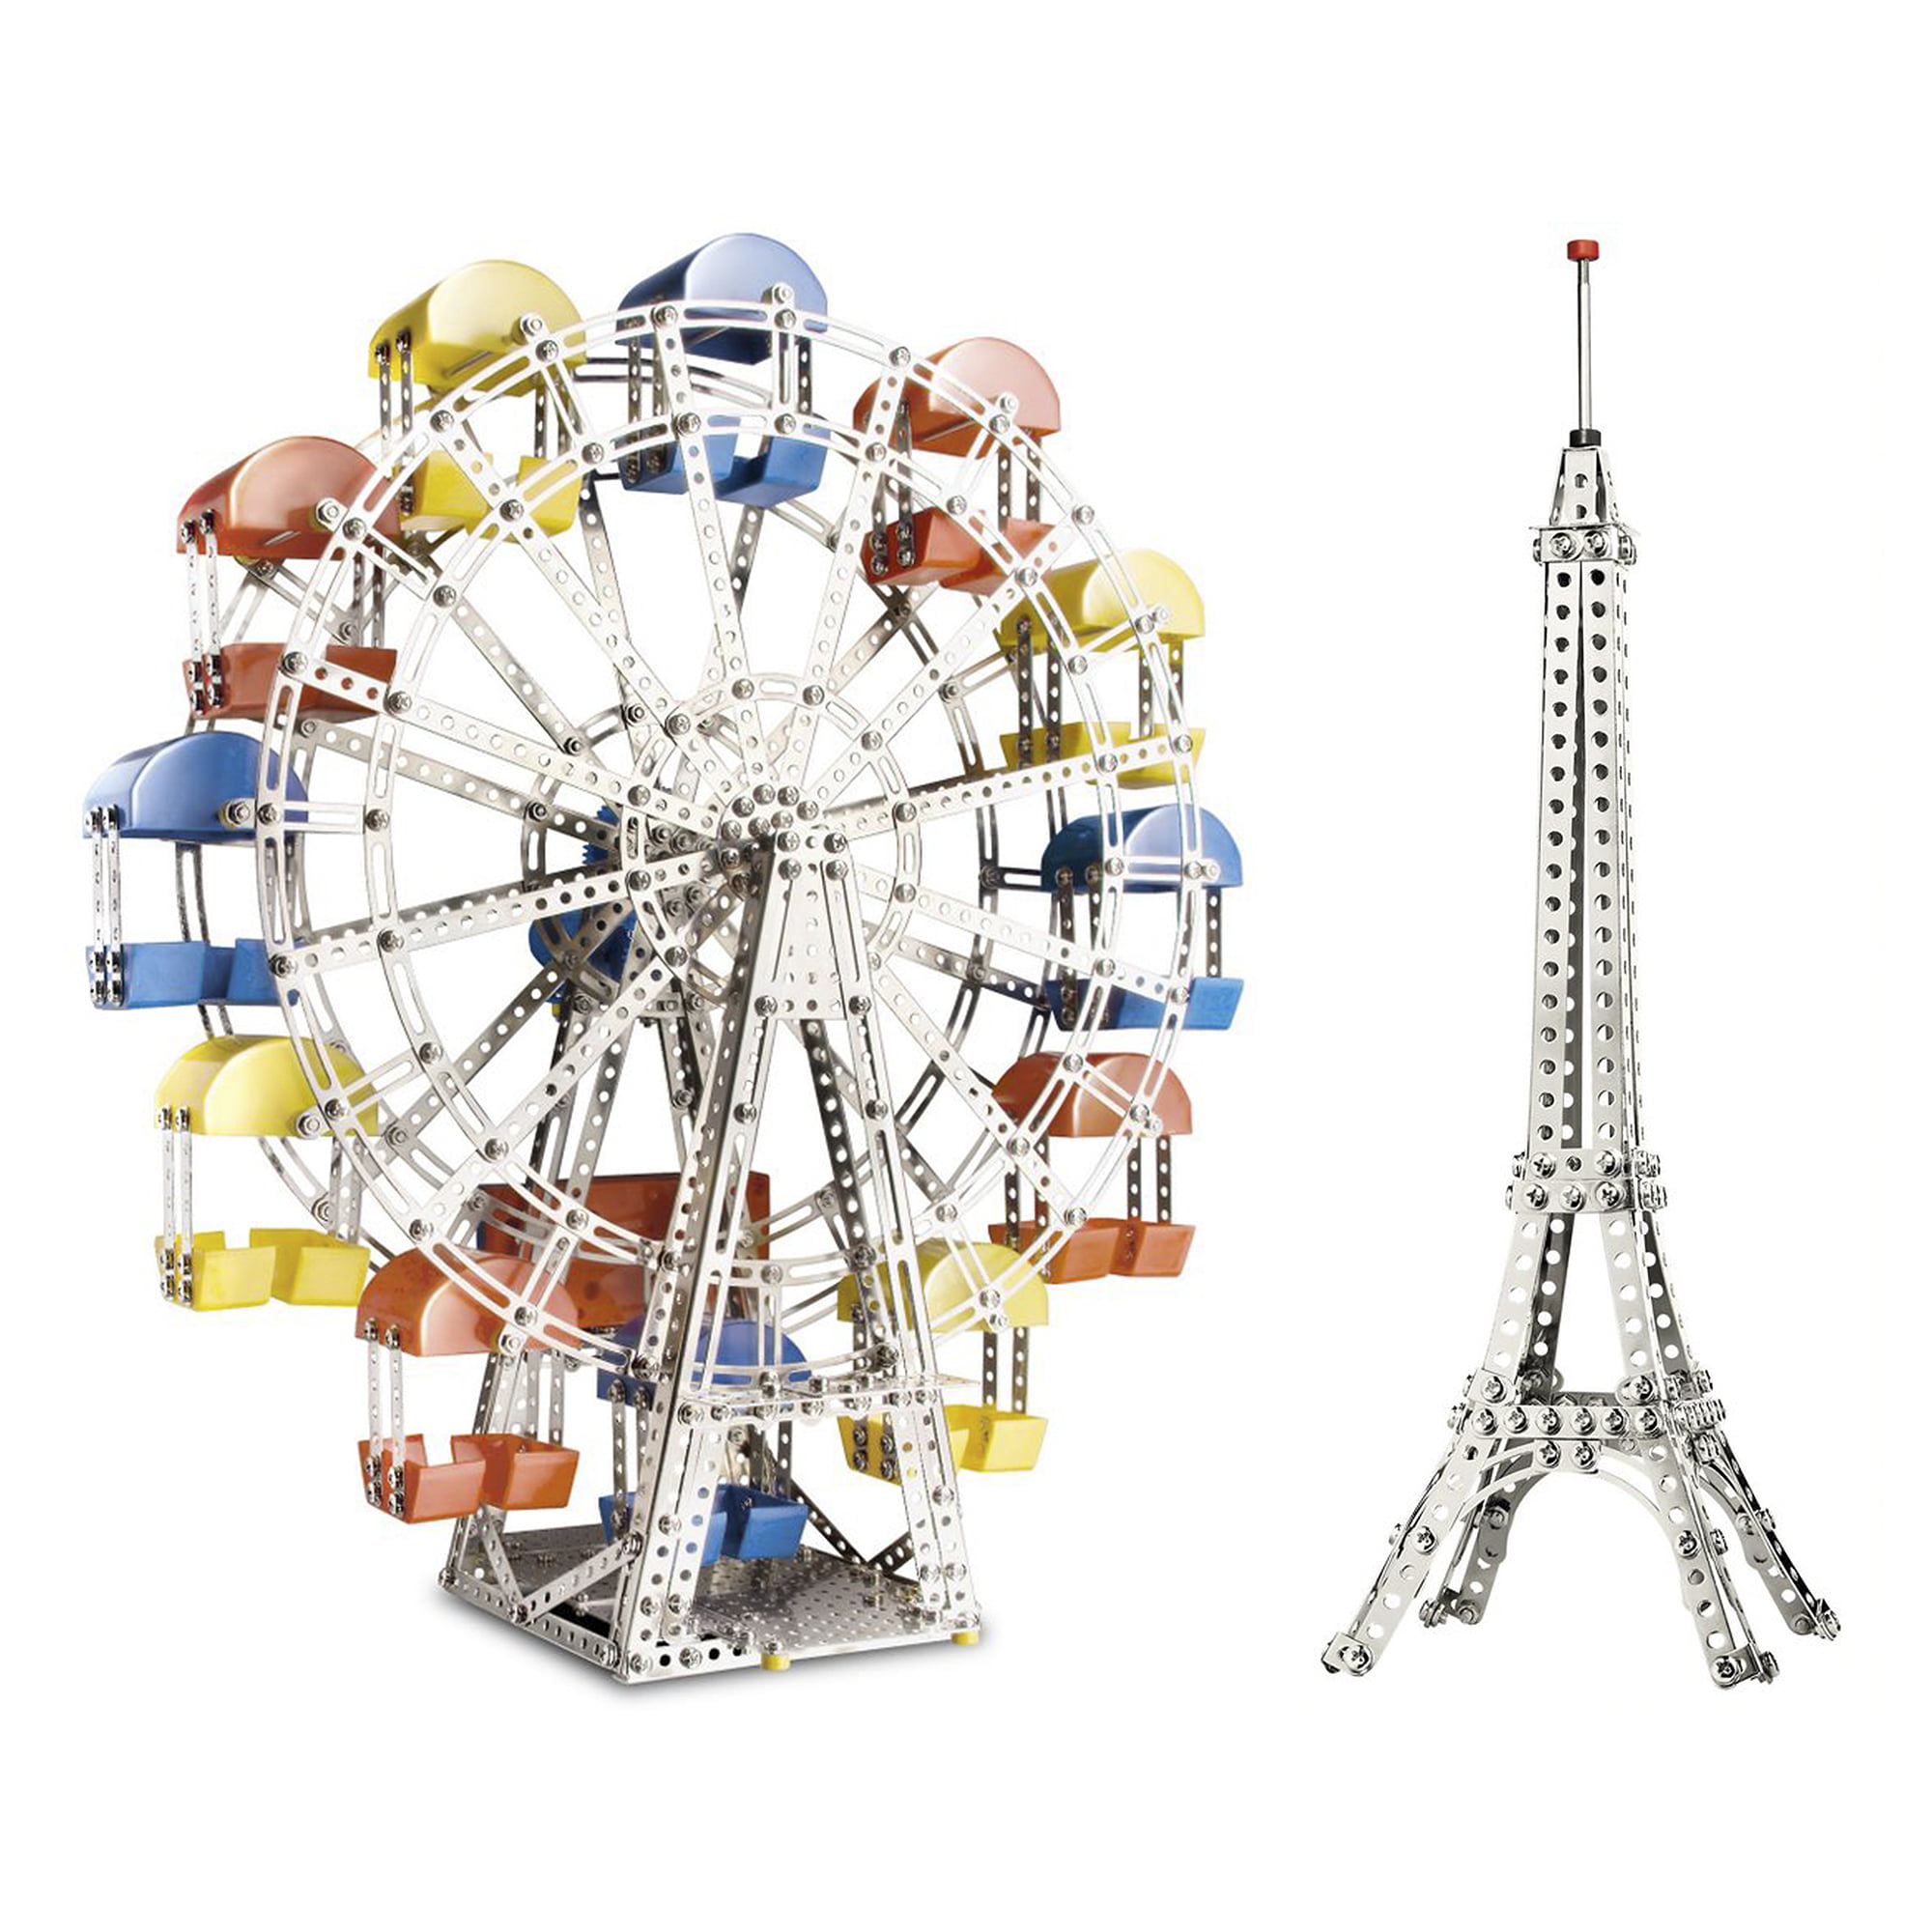 Eiffel Tower C460 Eitech Metal Construction Building Toy Steel Model 